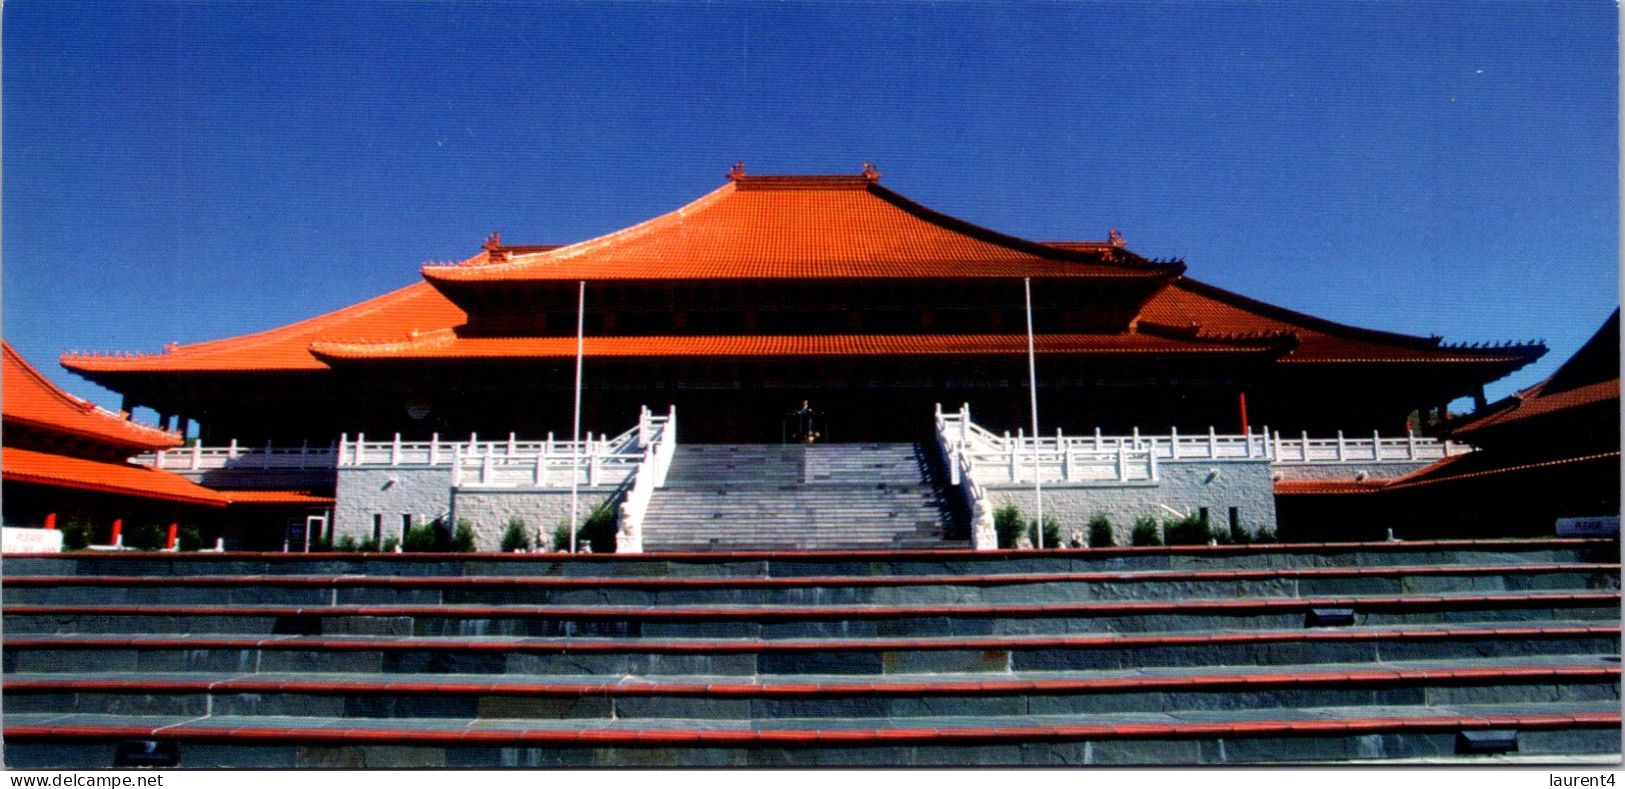 19-7-2023 (2 S 39) Australia - NSW - Wollongong Nan Tian Buddhist Temple - Wollongong